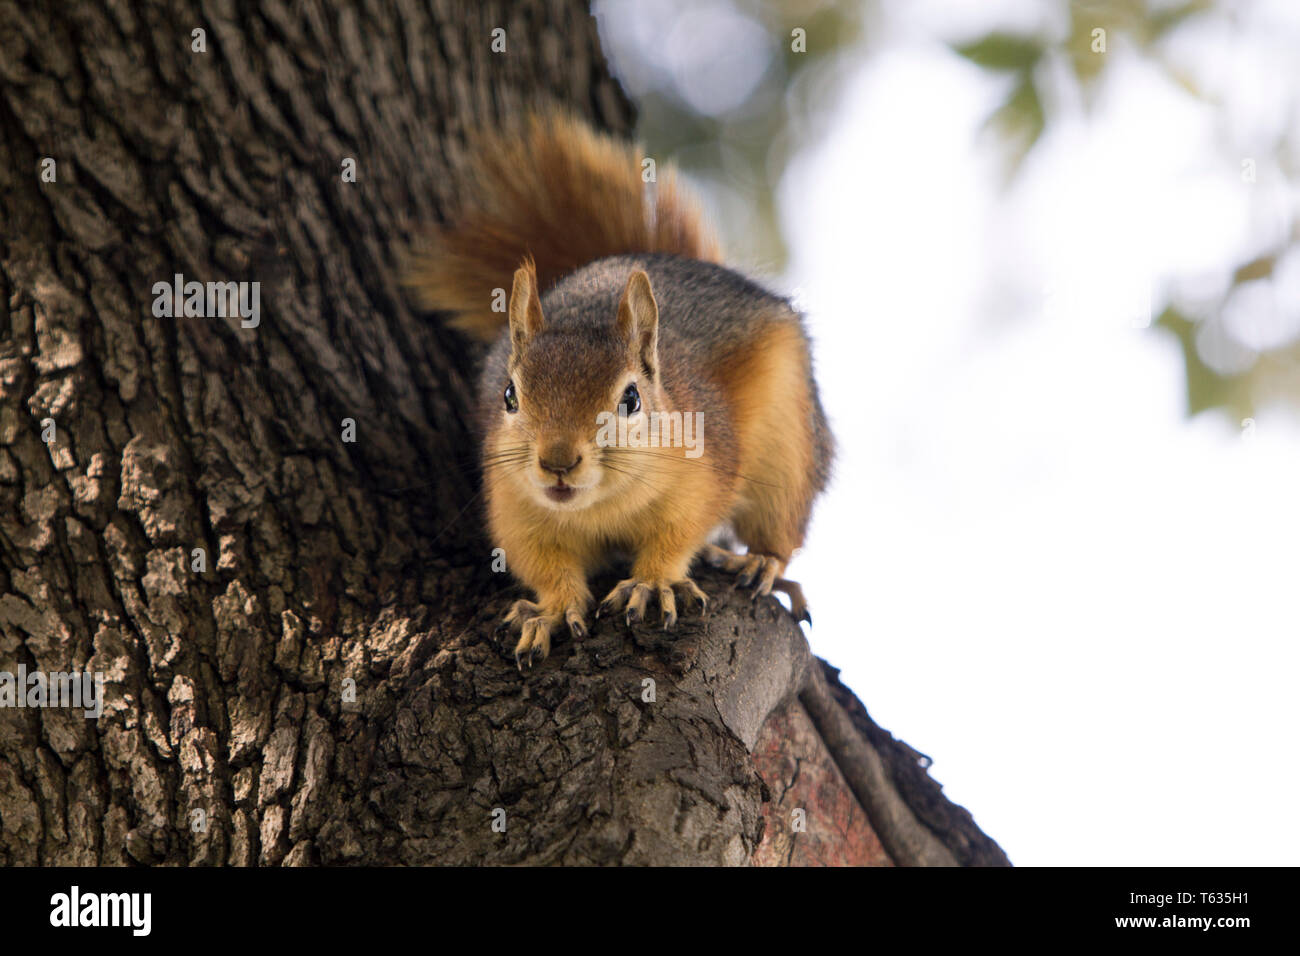 Close up full body portrait of a Sciurus Anomalus, Caucasian squirrel on a tree trunk. Stock Photo